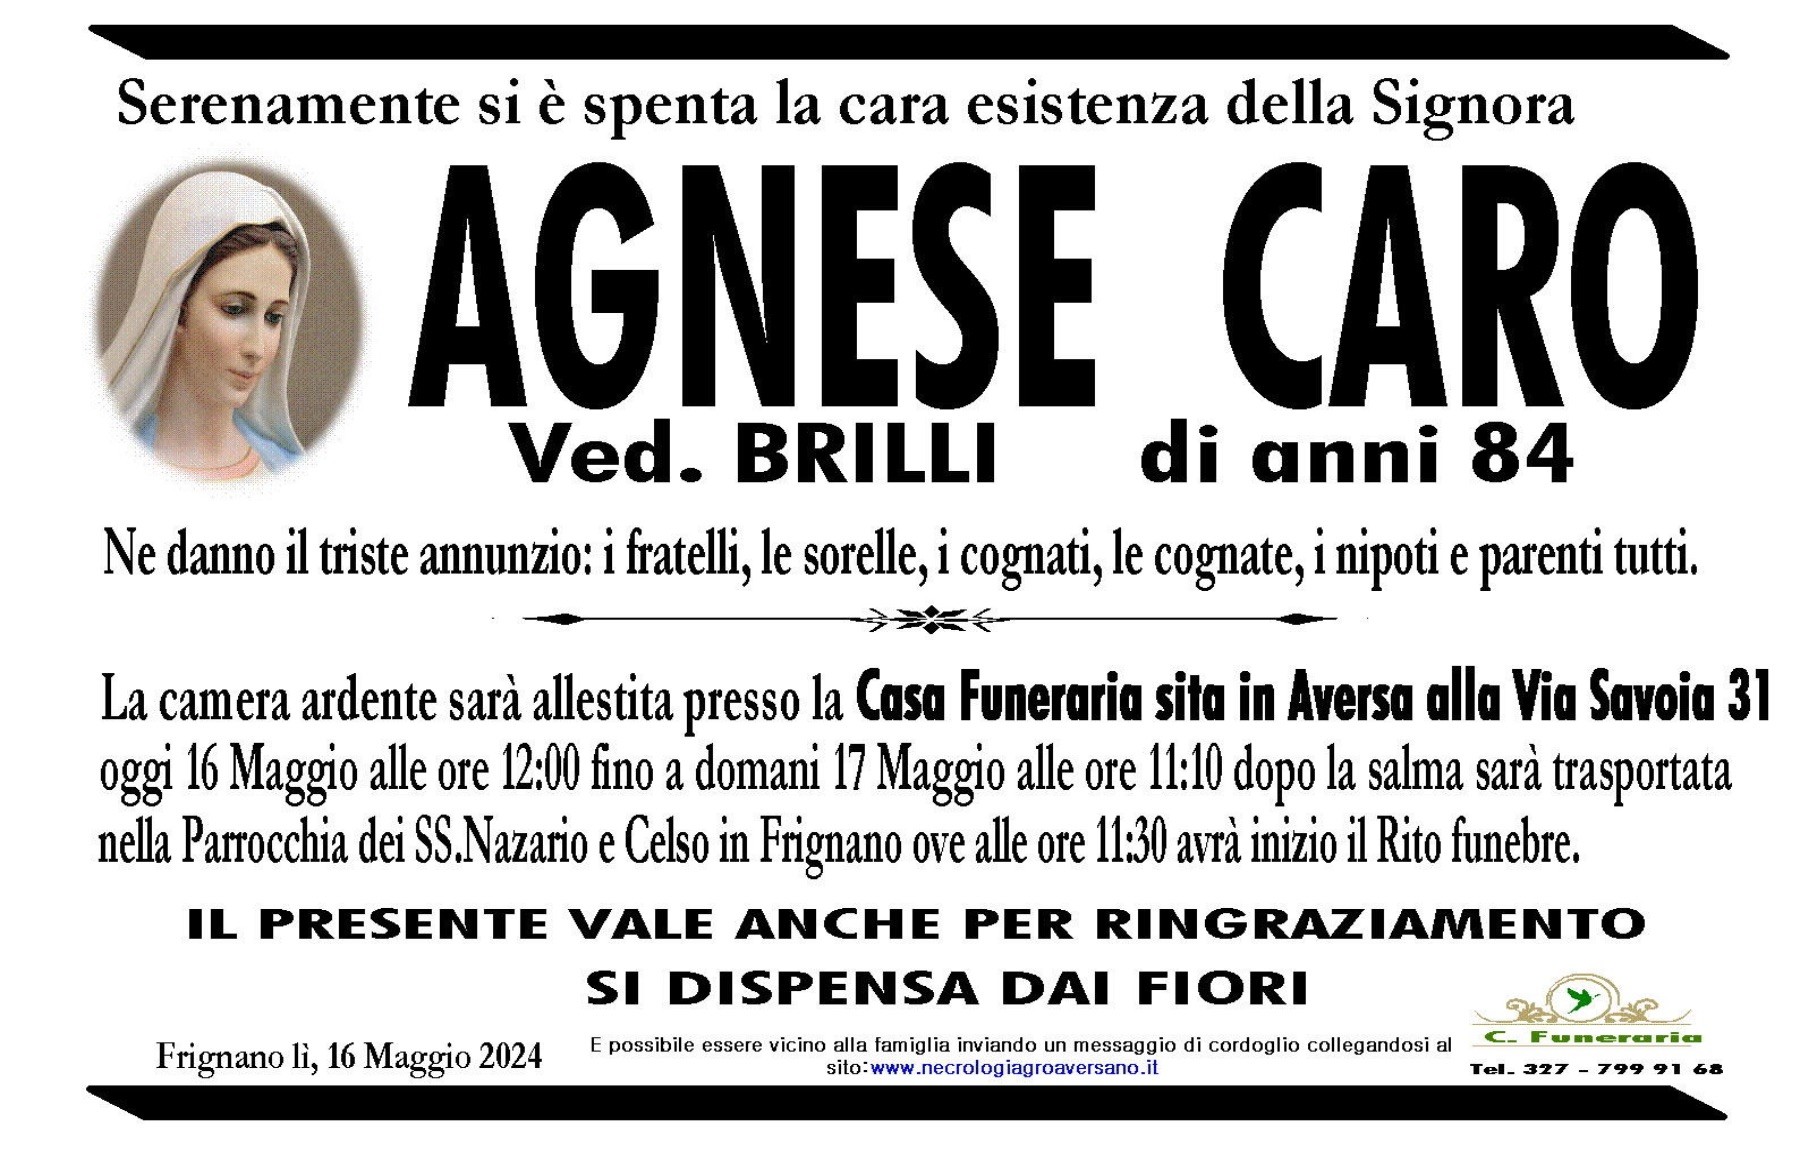 Agnese Caro